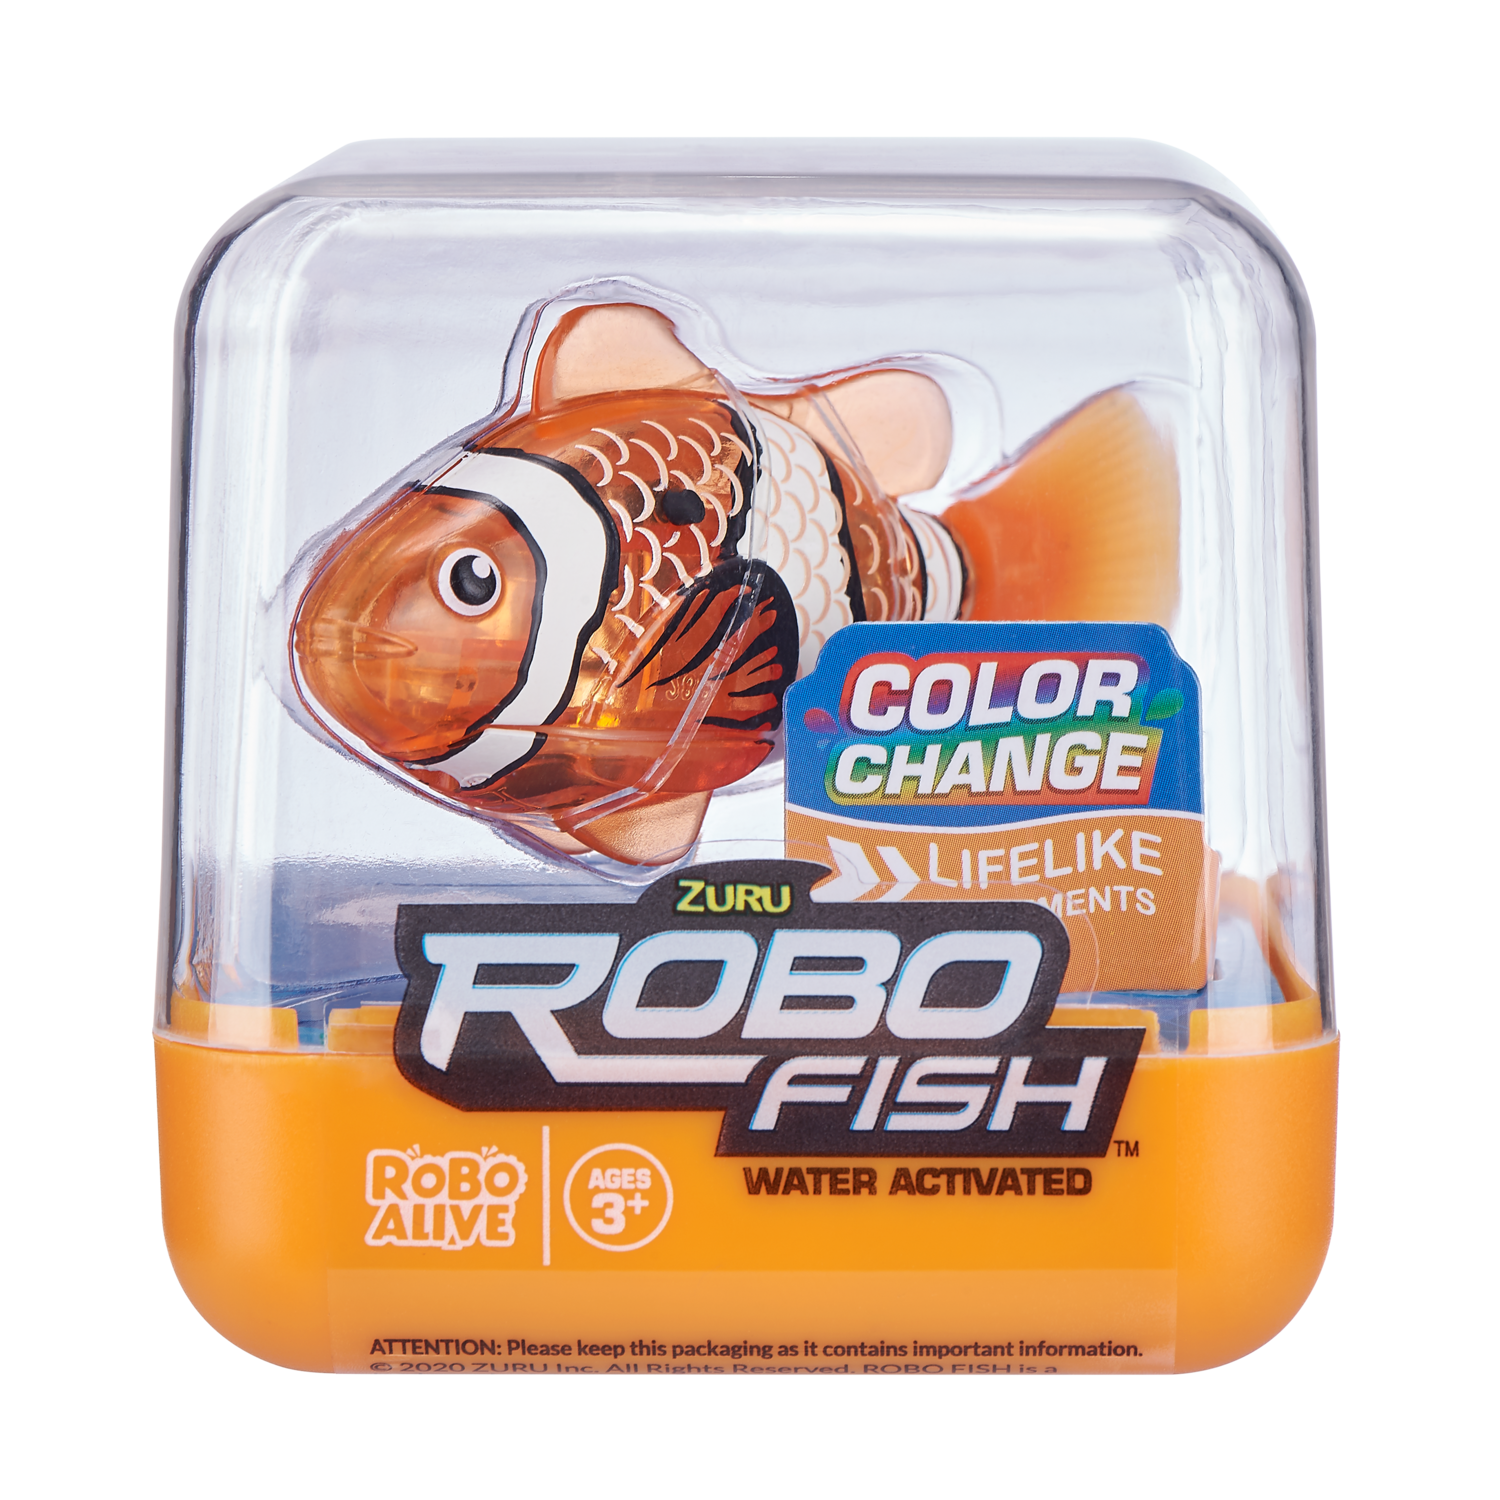 Robo Alive - Fish - Orange